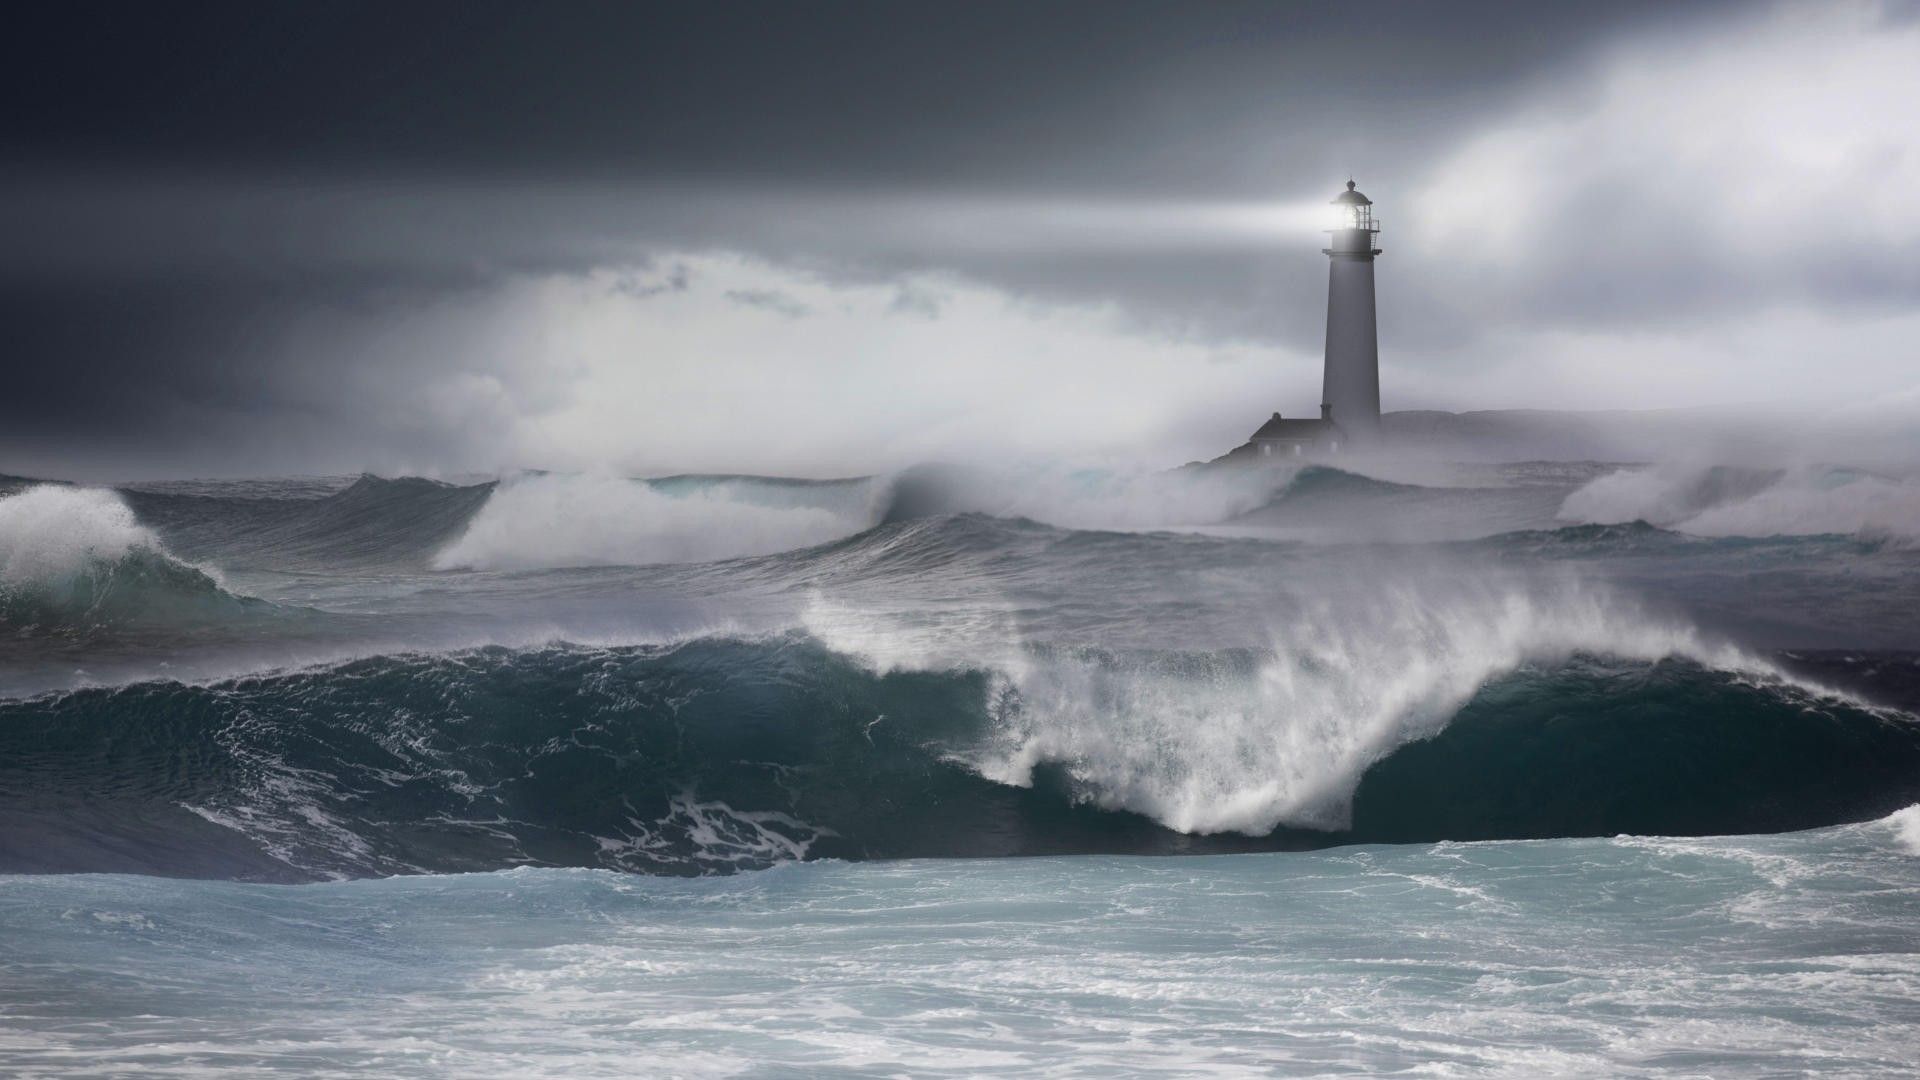 http://wallfon.com/walls/sea/lighthouse-in-a-stormy-sea.jpg ...